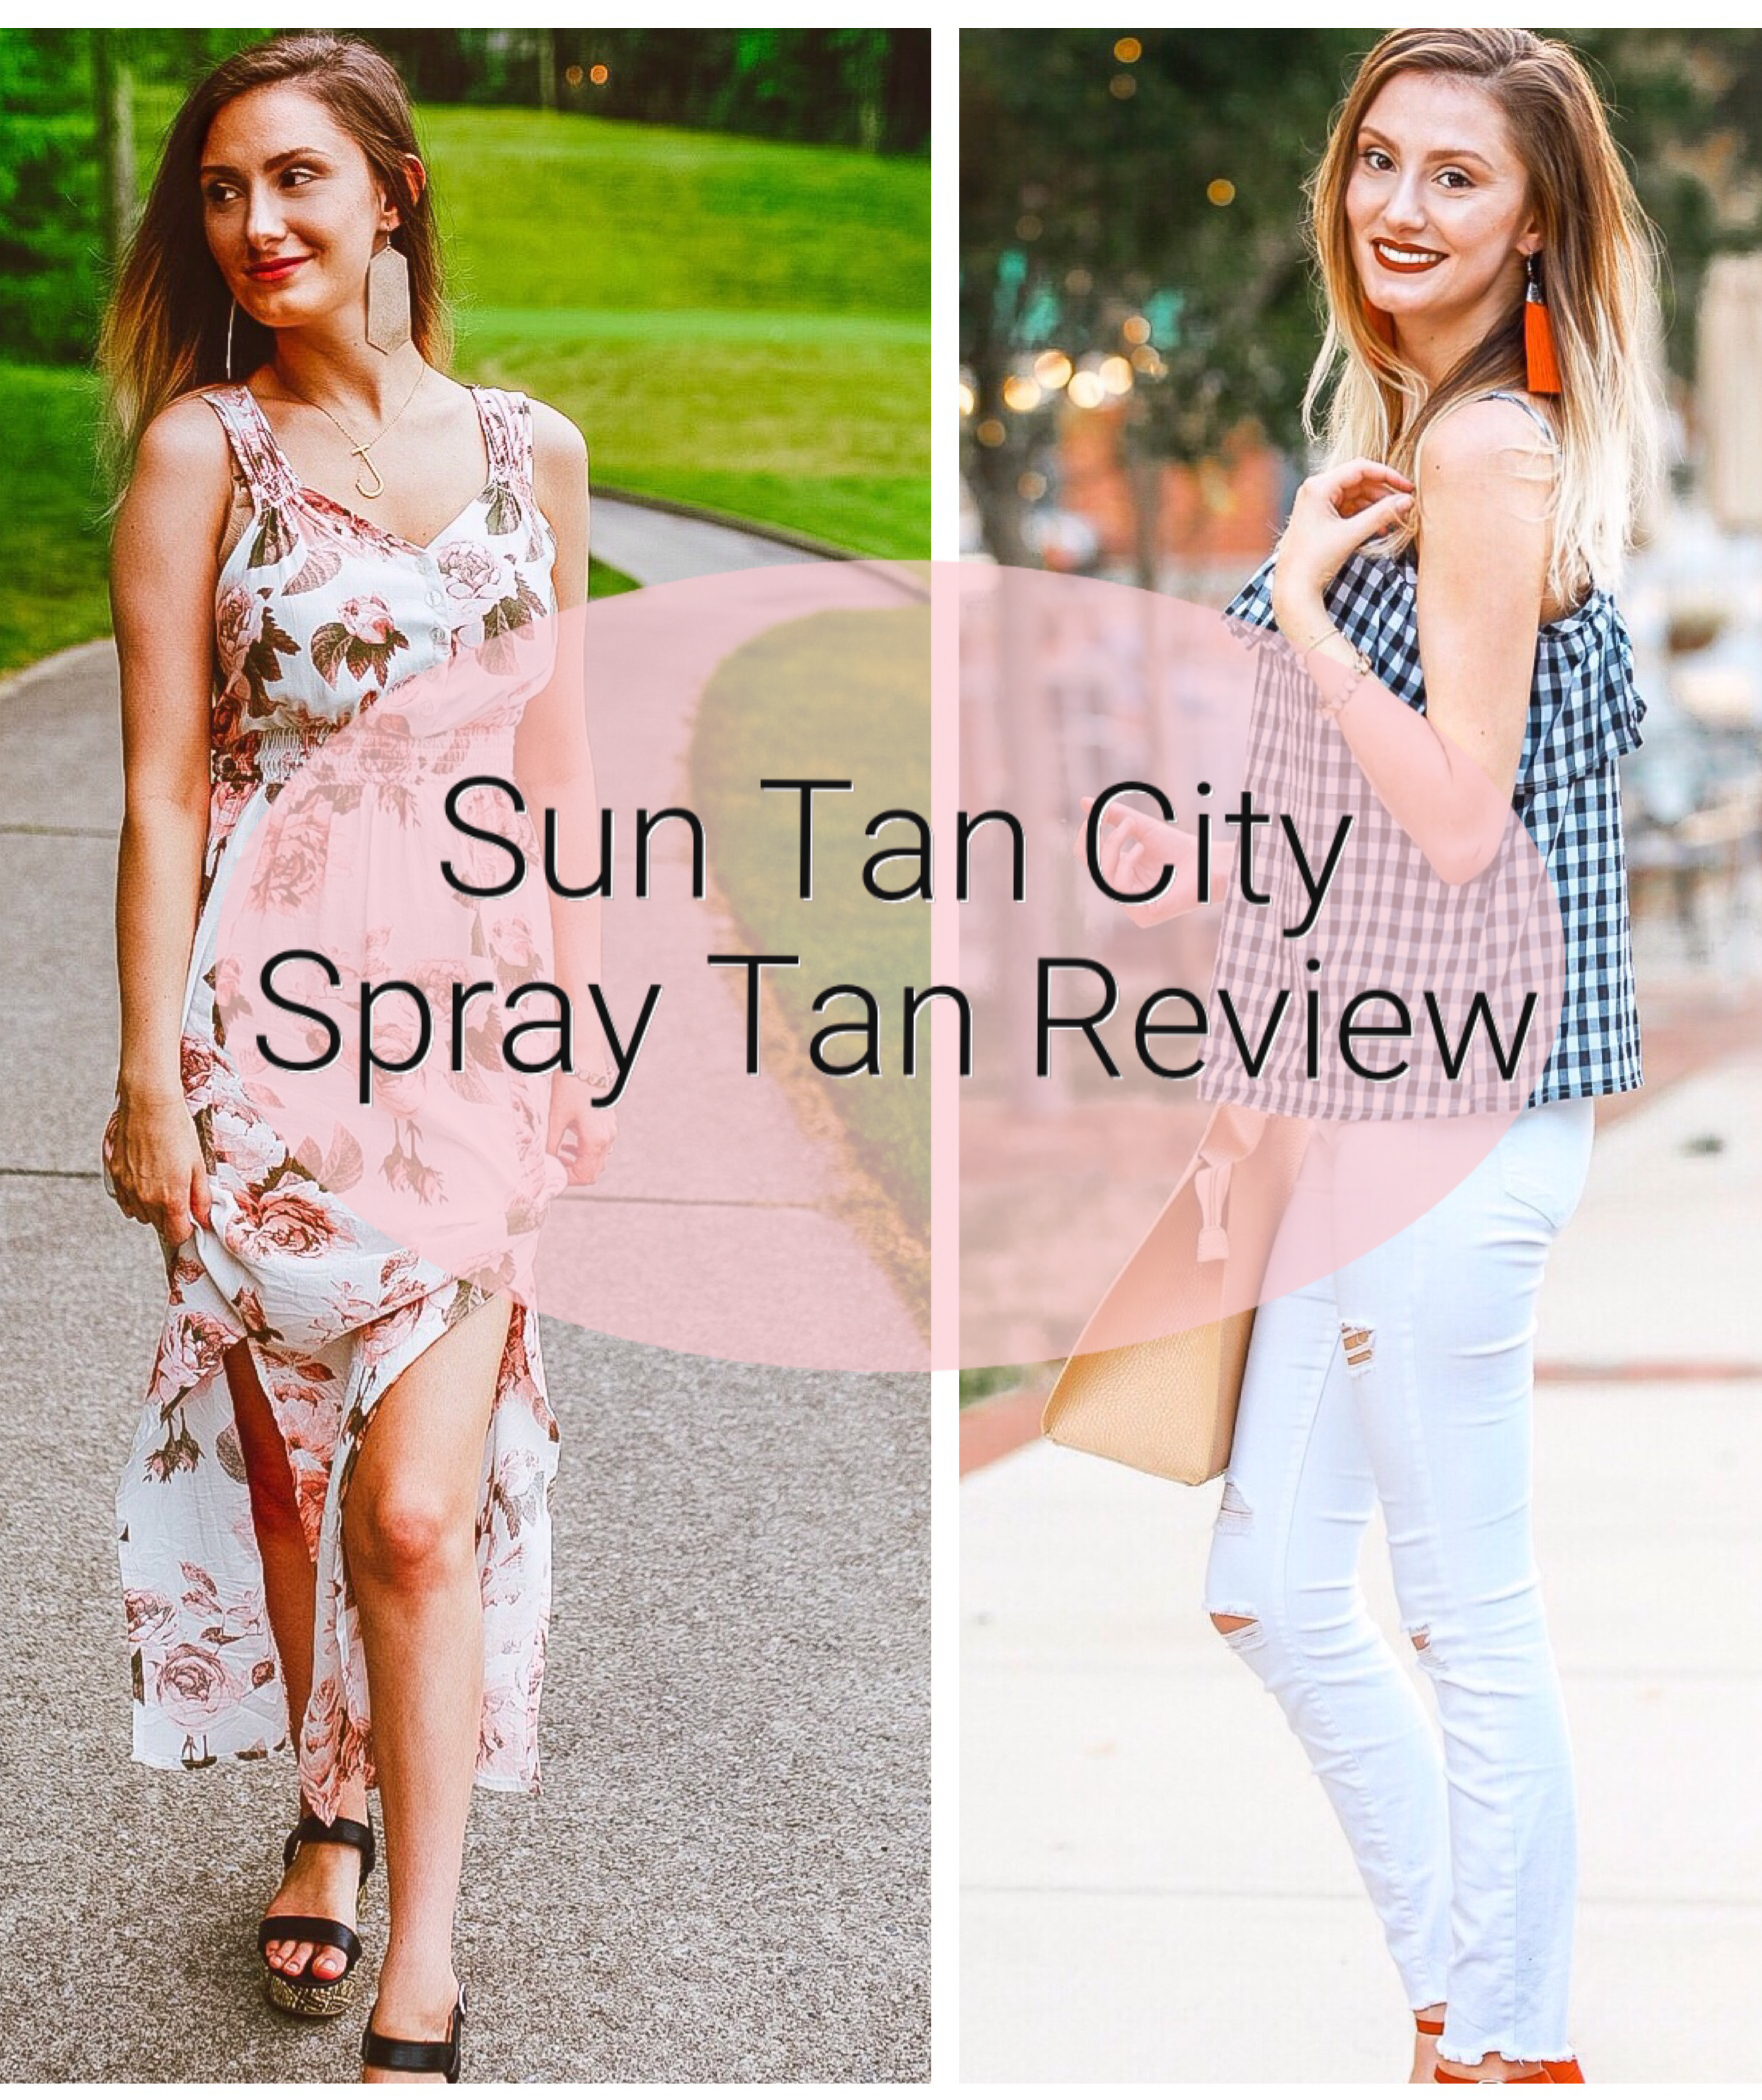 Sun Tan City Spray Tan Review | Lifestyle, fashion, and beauty blogger Jessica Linn reviewing Sun Tan City's Level 3 Spray Tan.